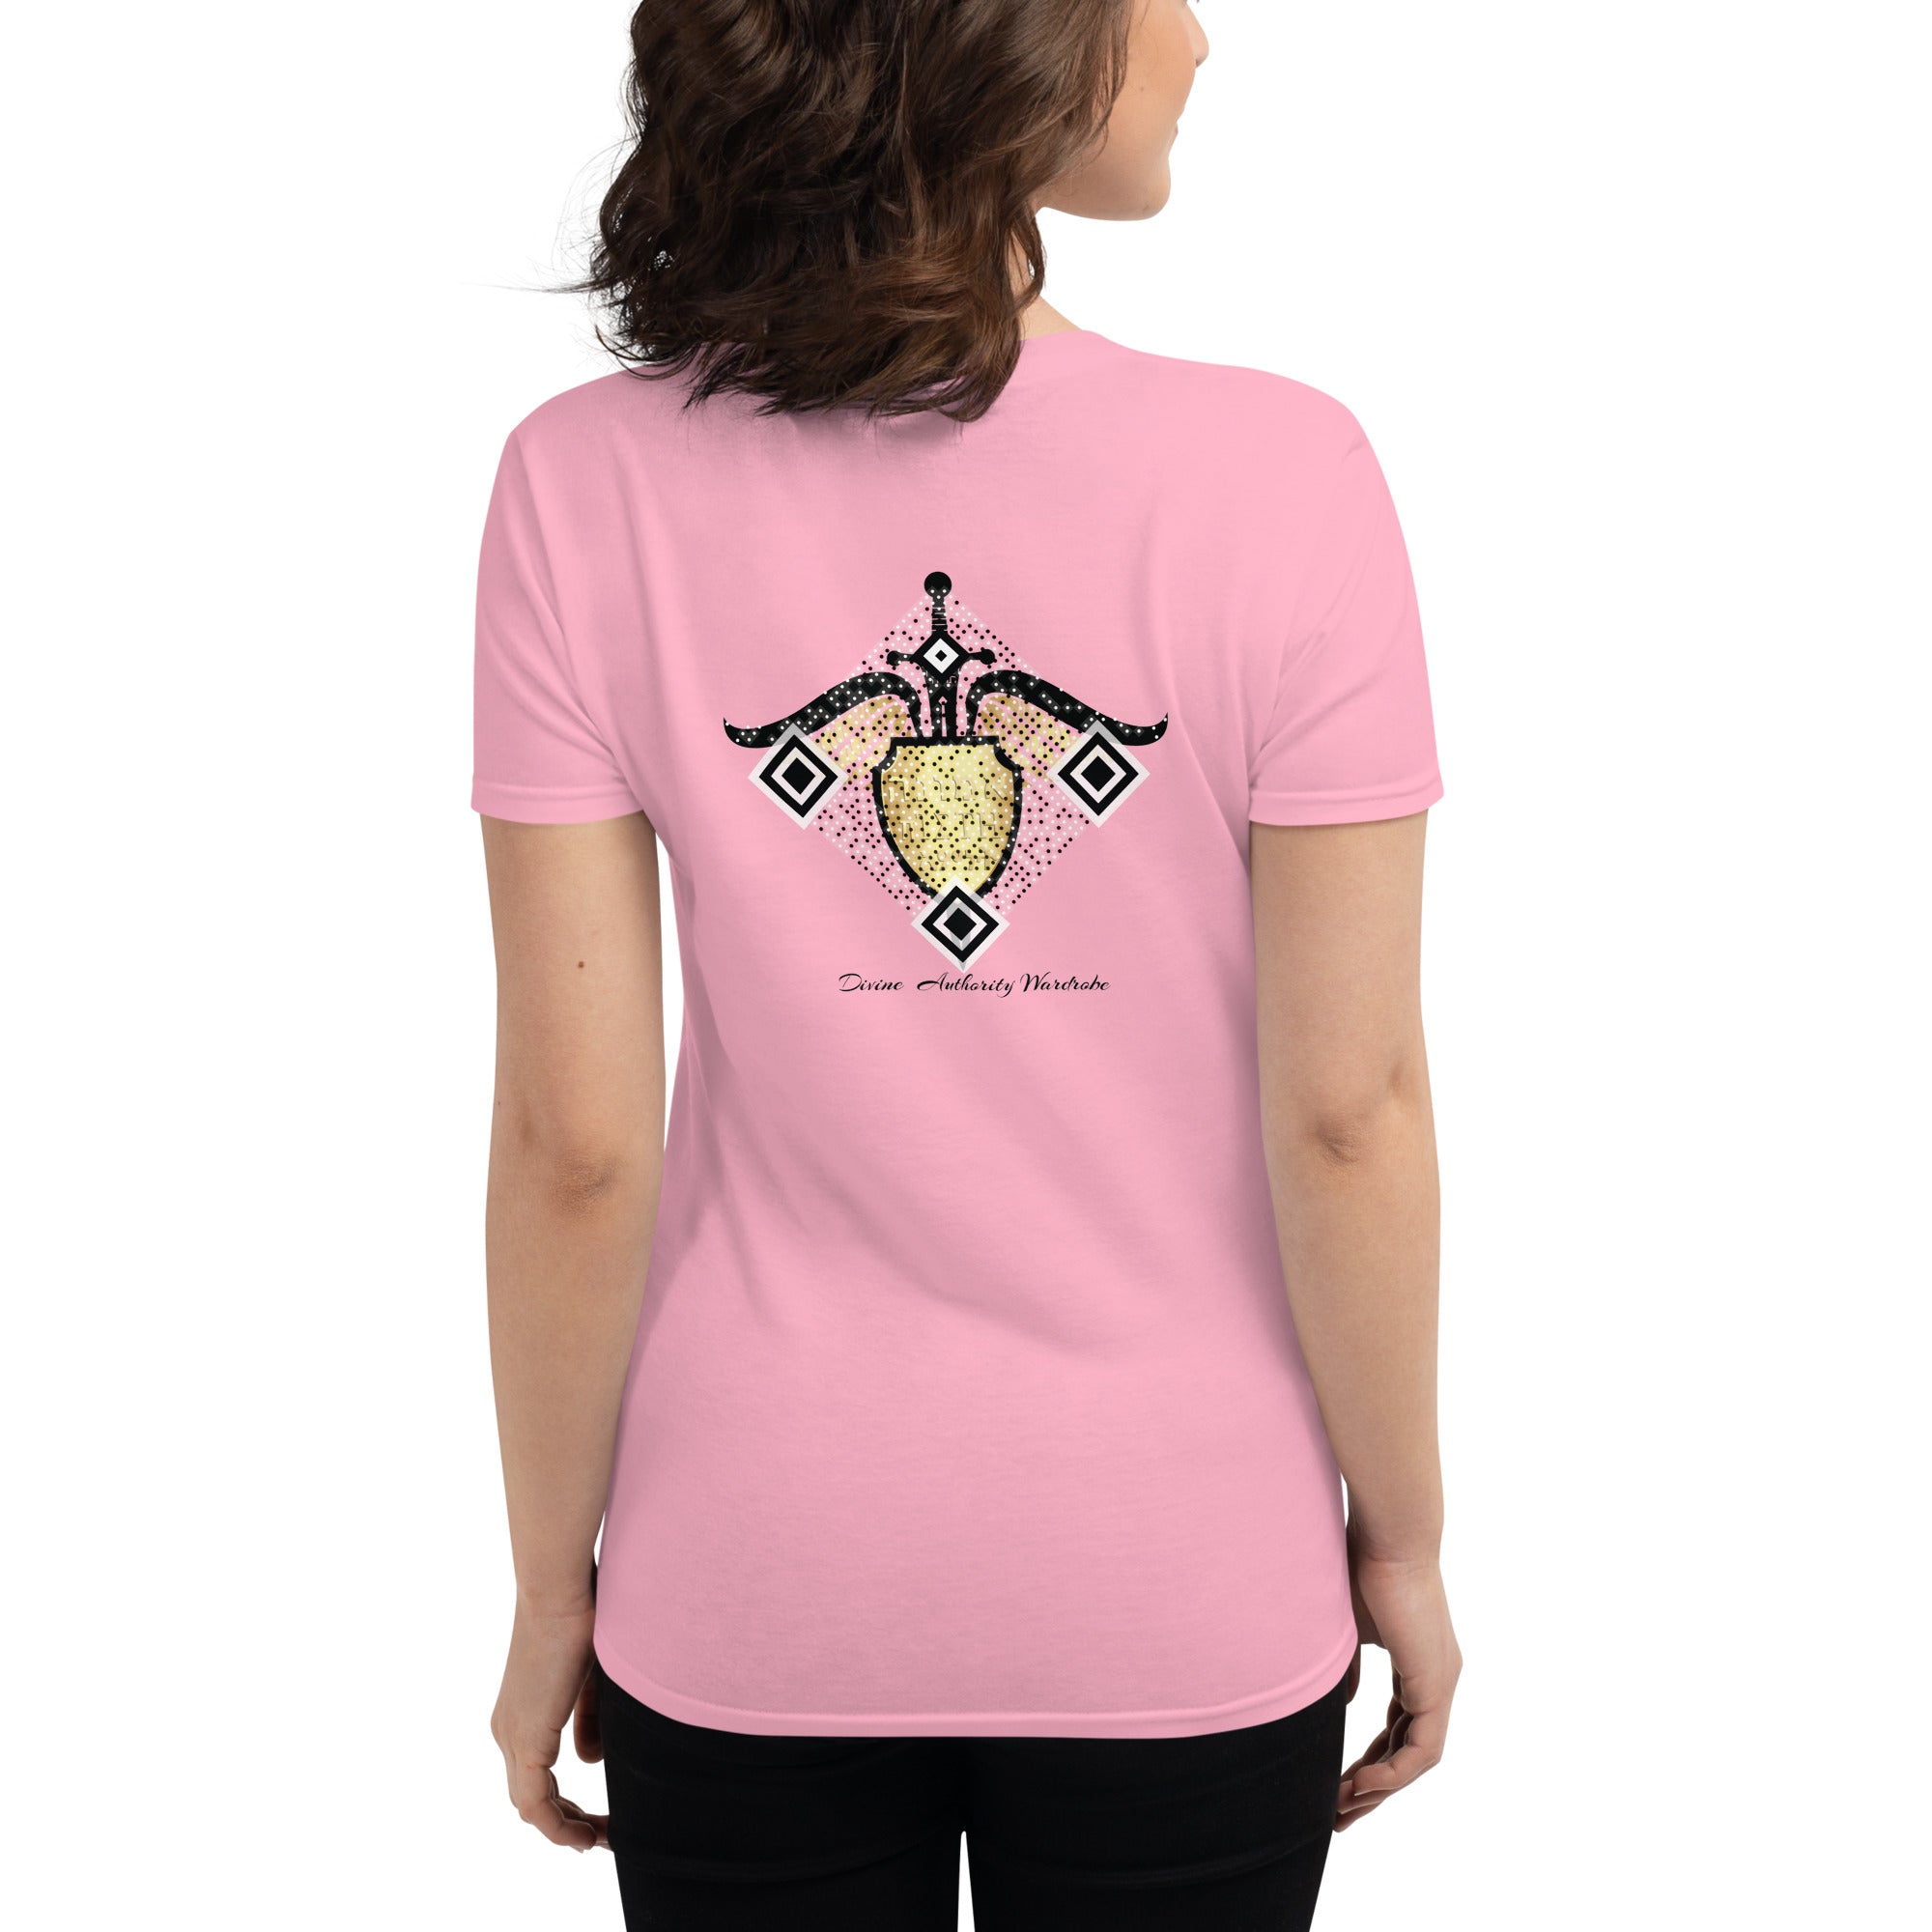 Prophecy Women's short sleeve t-shirt